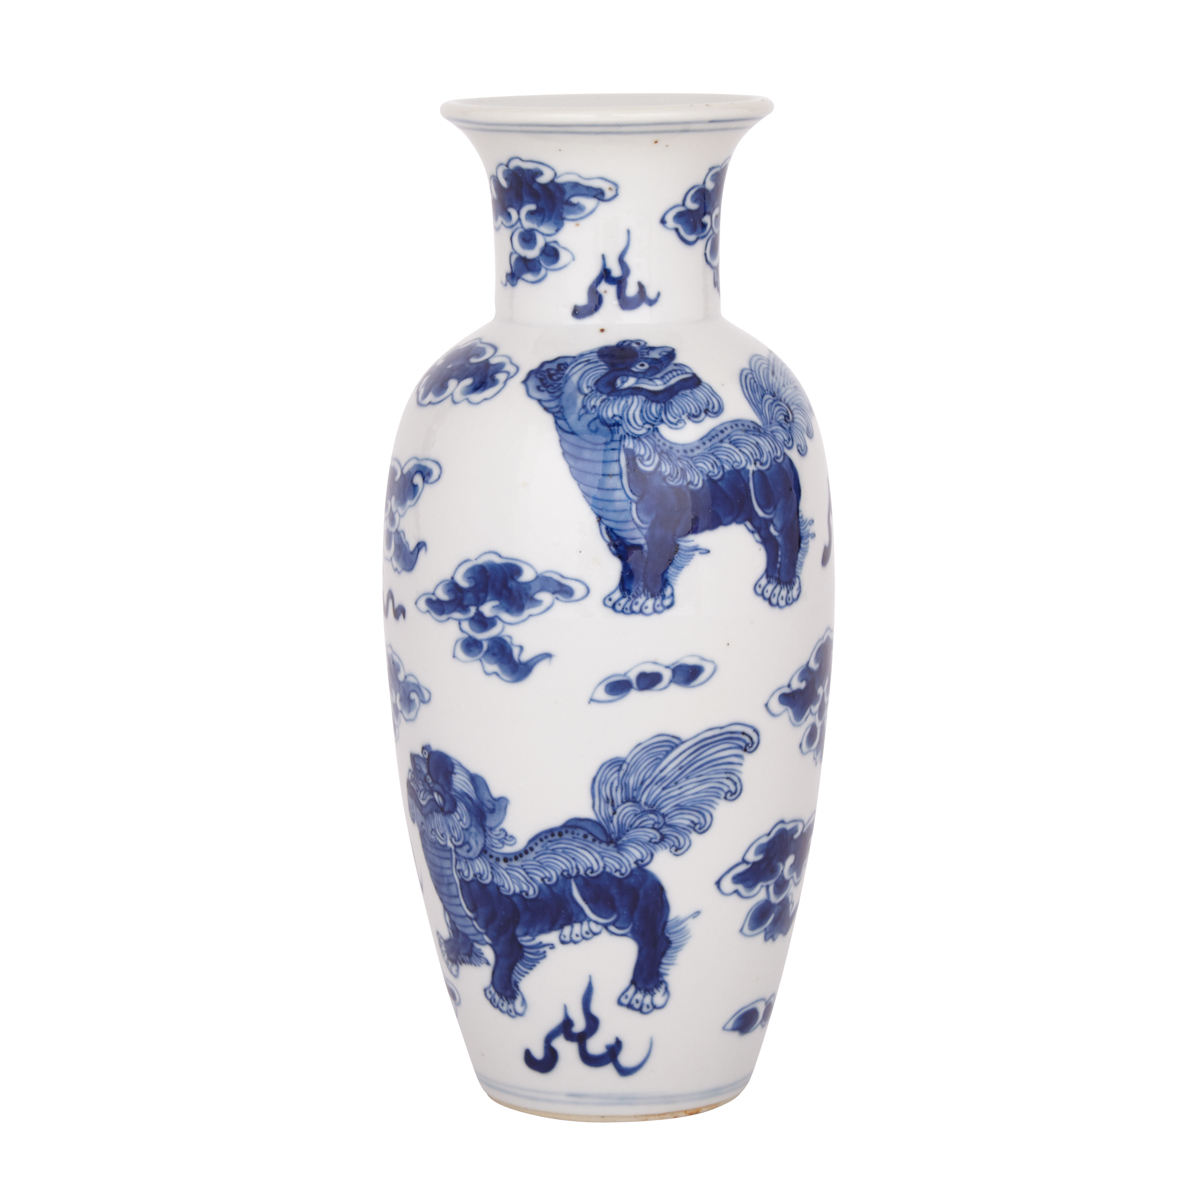 Blue and White Fu Dog Baluster Vase, Late Qing Dynasty